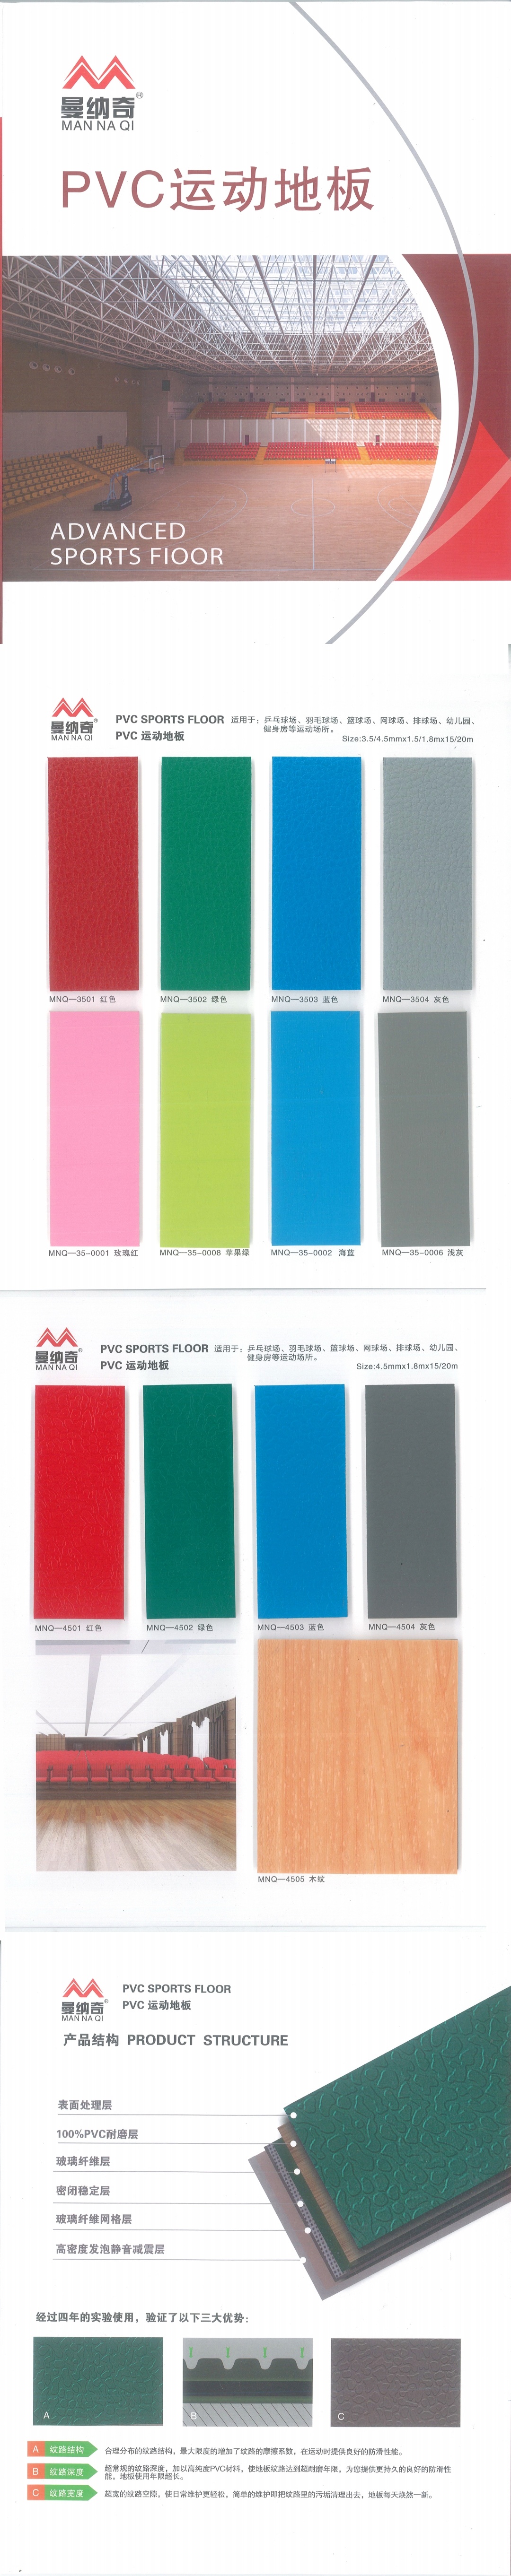 pvc塑胶地板曼纳奇品牌，pvc地板品牌-专业生产厂家示例图1